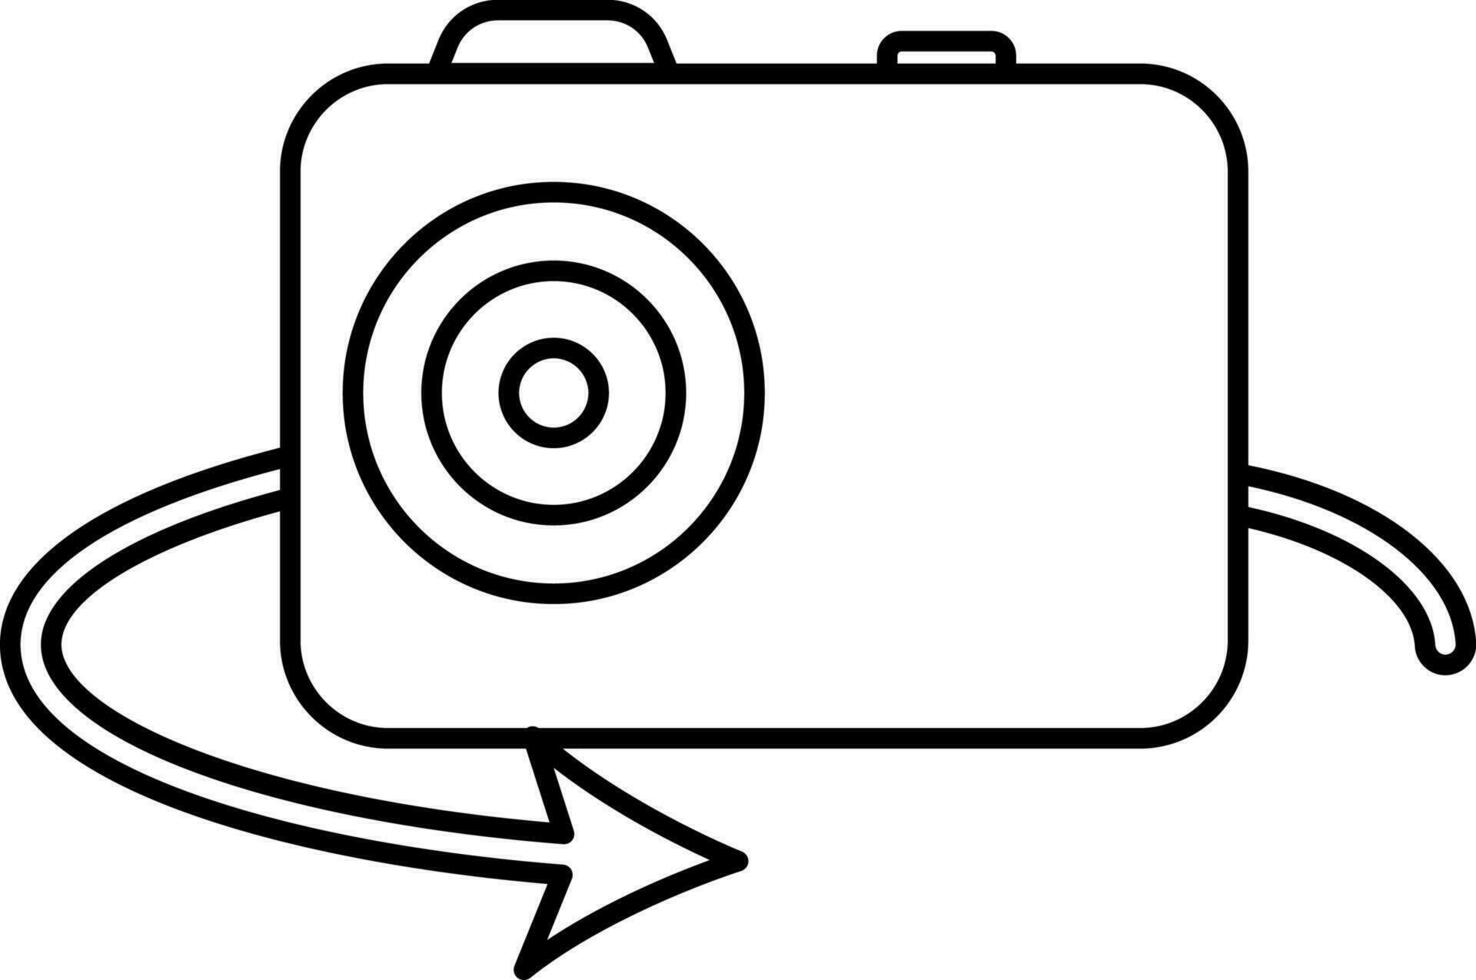 Camera rotate icon or symbol. vector